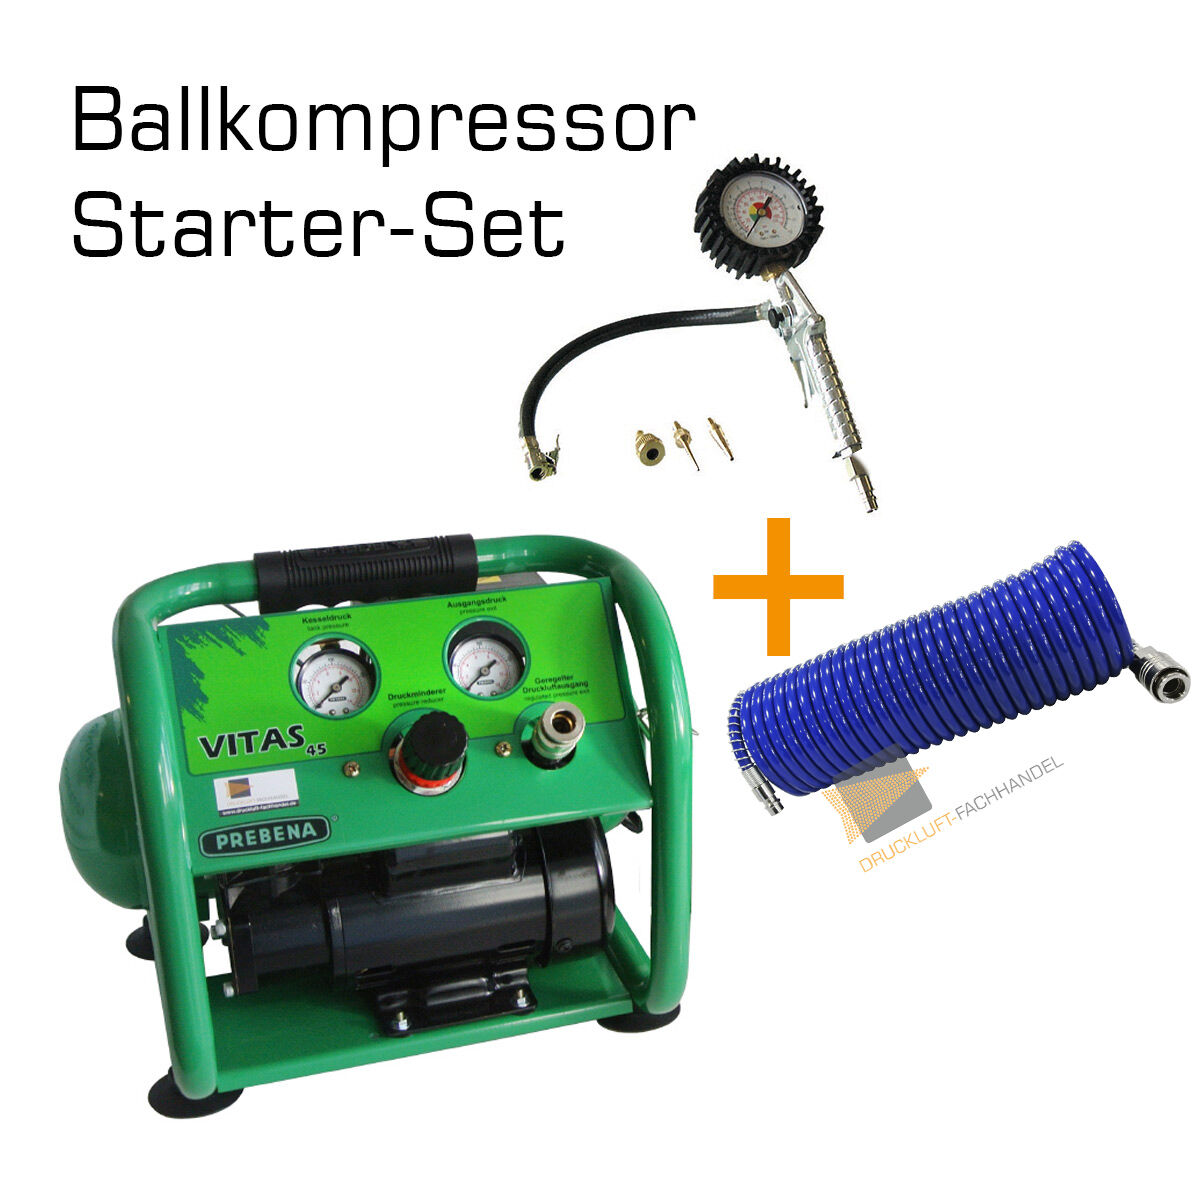 AKTION Starter-Set Ballkompressor Prebena Vitas 45 + Schlauchset + Reifenfüller